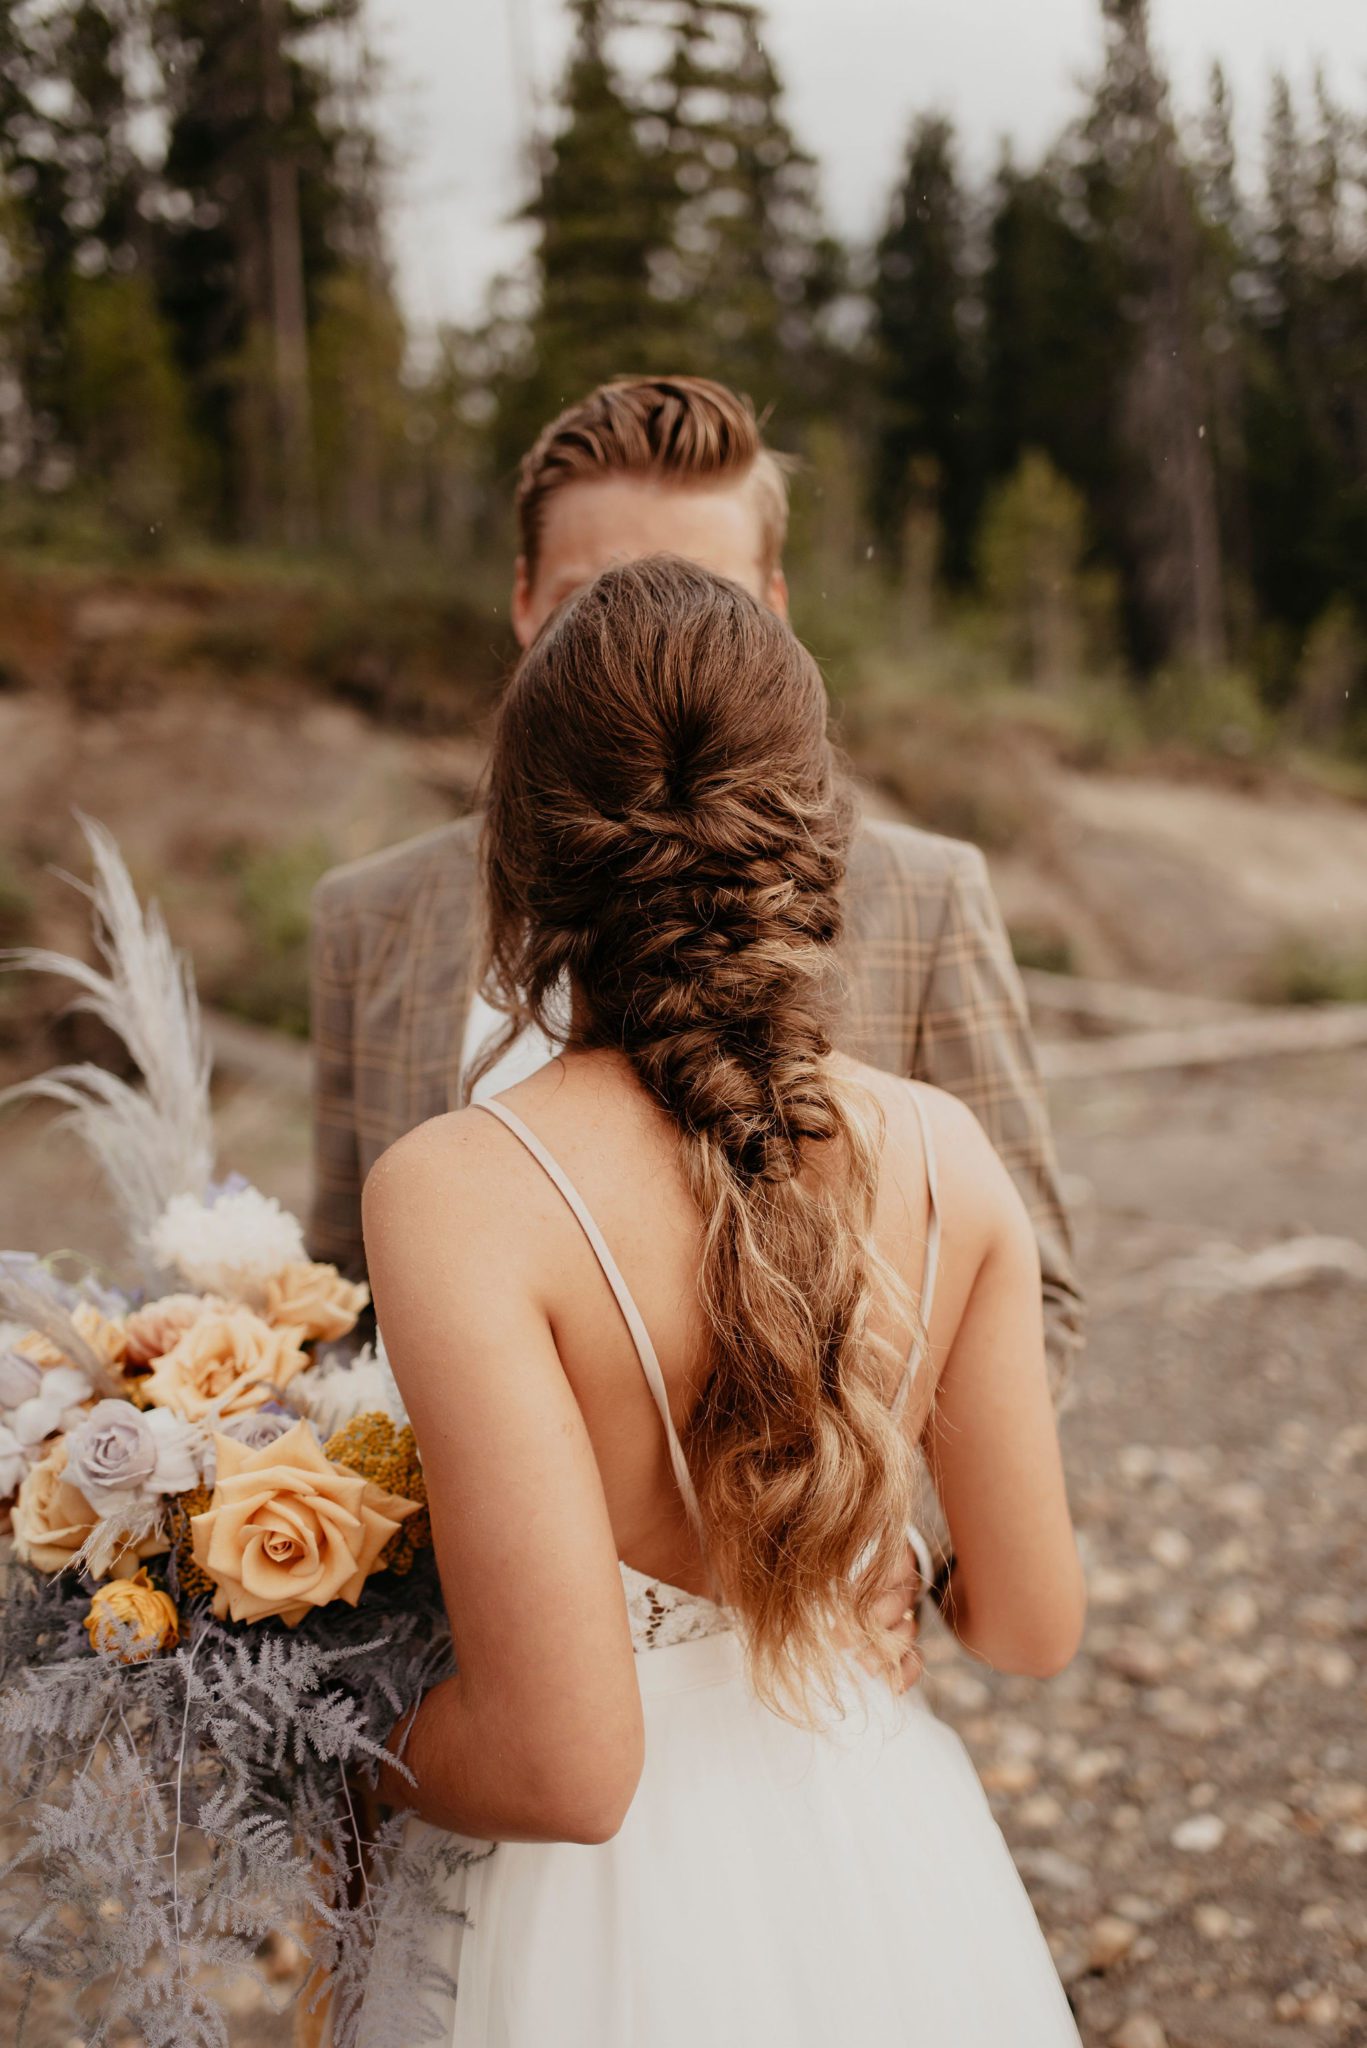 Braided wedding hair inspiration for the boho bride